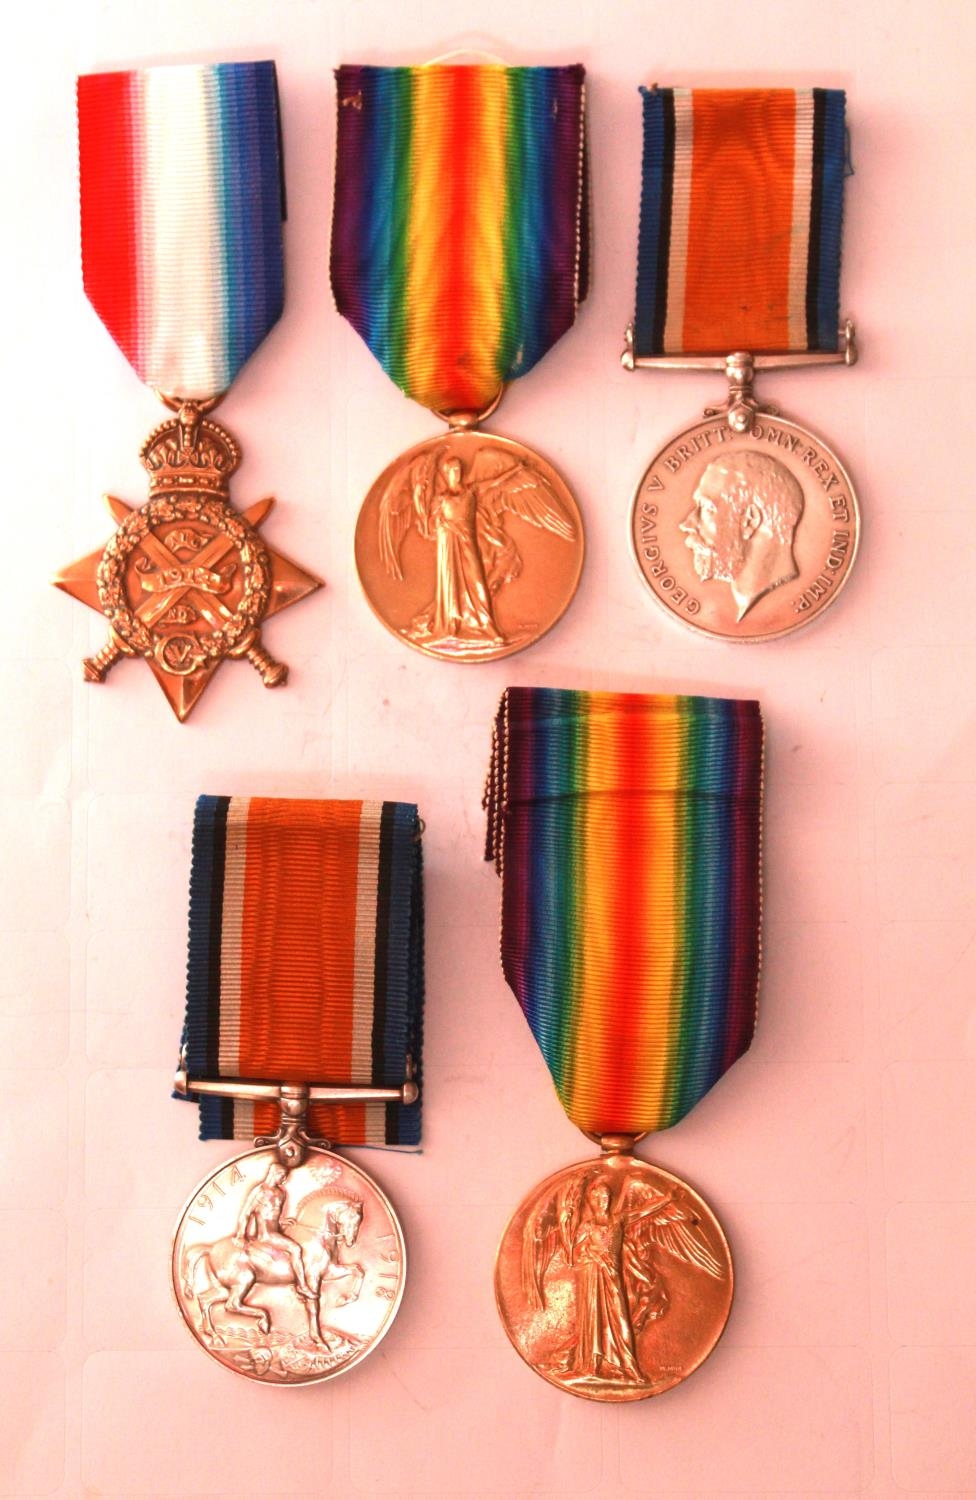 1914 Star, Victory Medal, 1914-18 War Medal. To 2358 Pte G.E. Austin. Liverpool Regiment. Victory